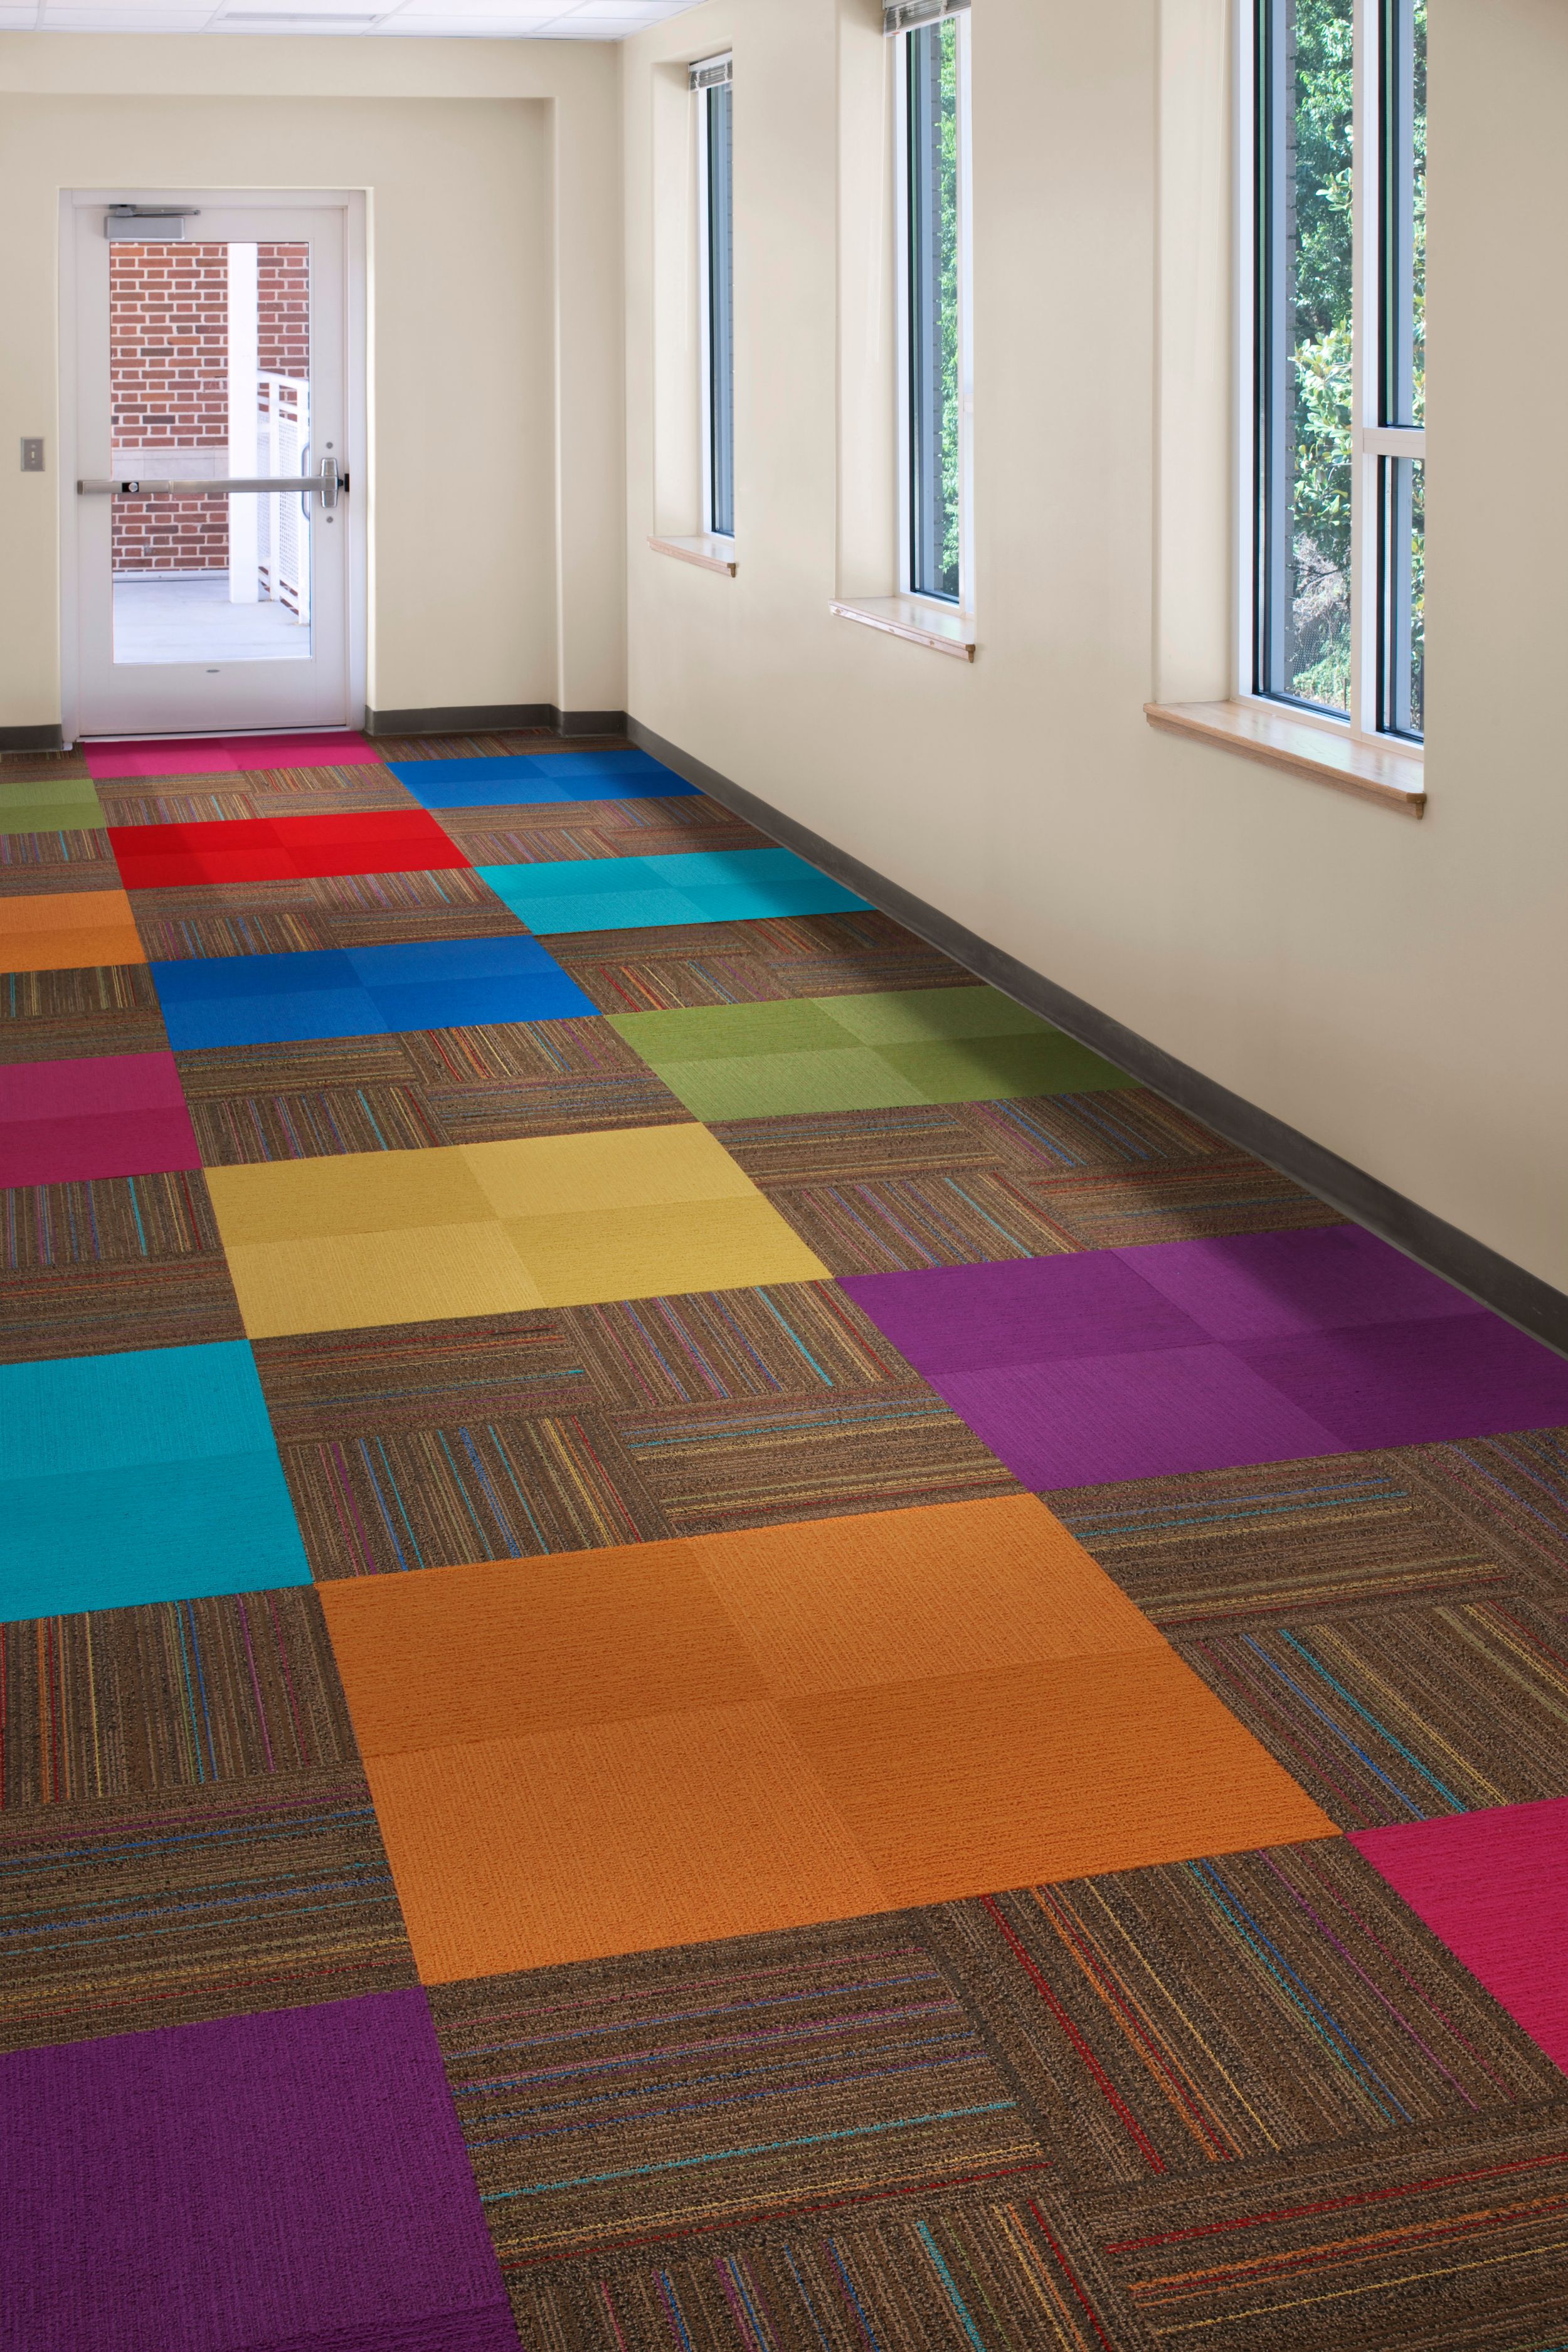 Interface Roy G Biv and Viva Colores carpet tile in open hallway imagen número 2